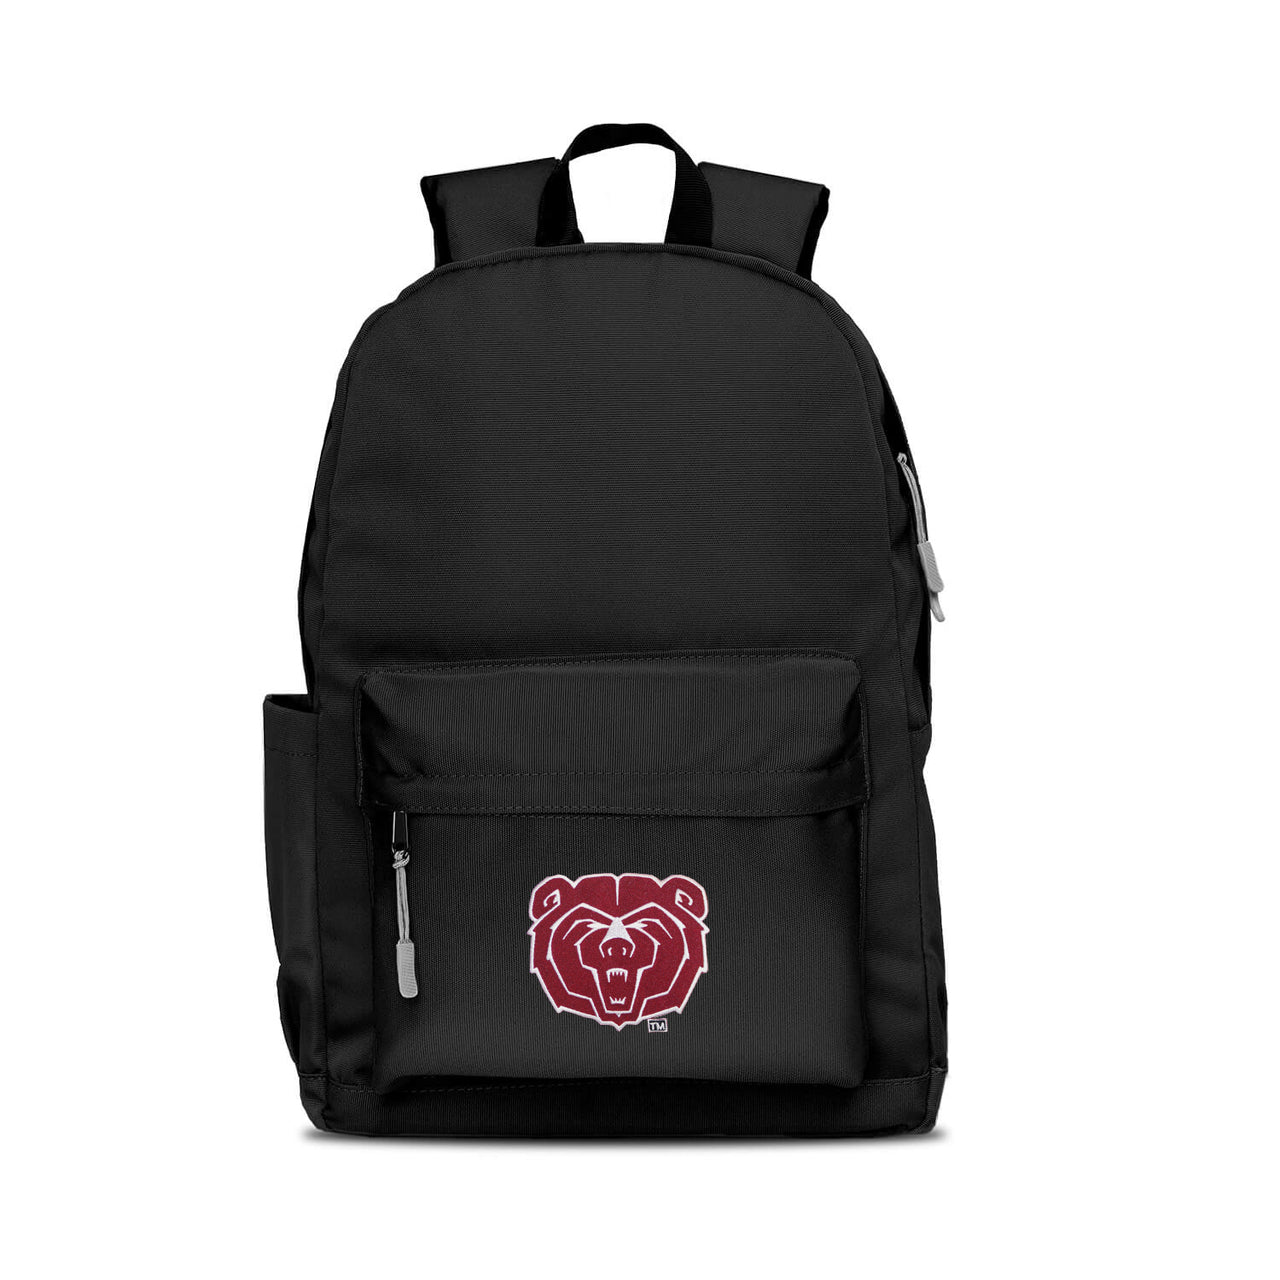 Missouri State Bears Campus Laptop Backpack- Black